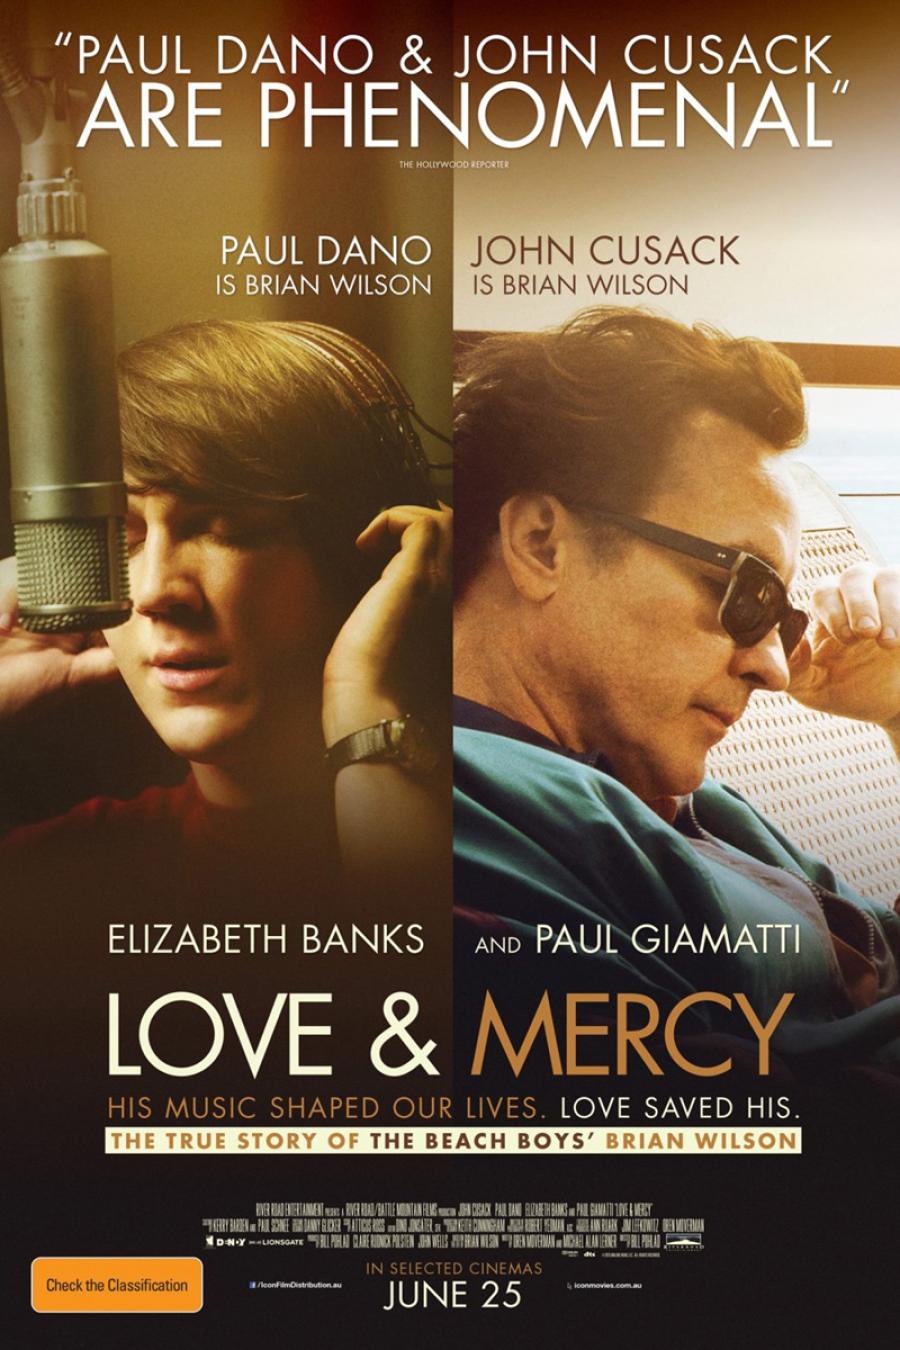 Bibliotekar Helle Kundby anbefaler varmt filmen "Love & Mercy" om bandet The Beach Boys.